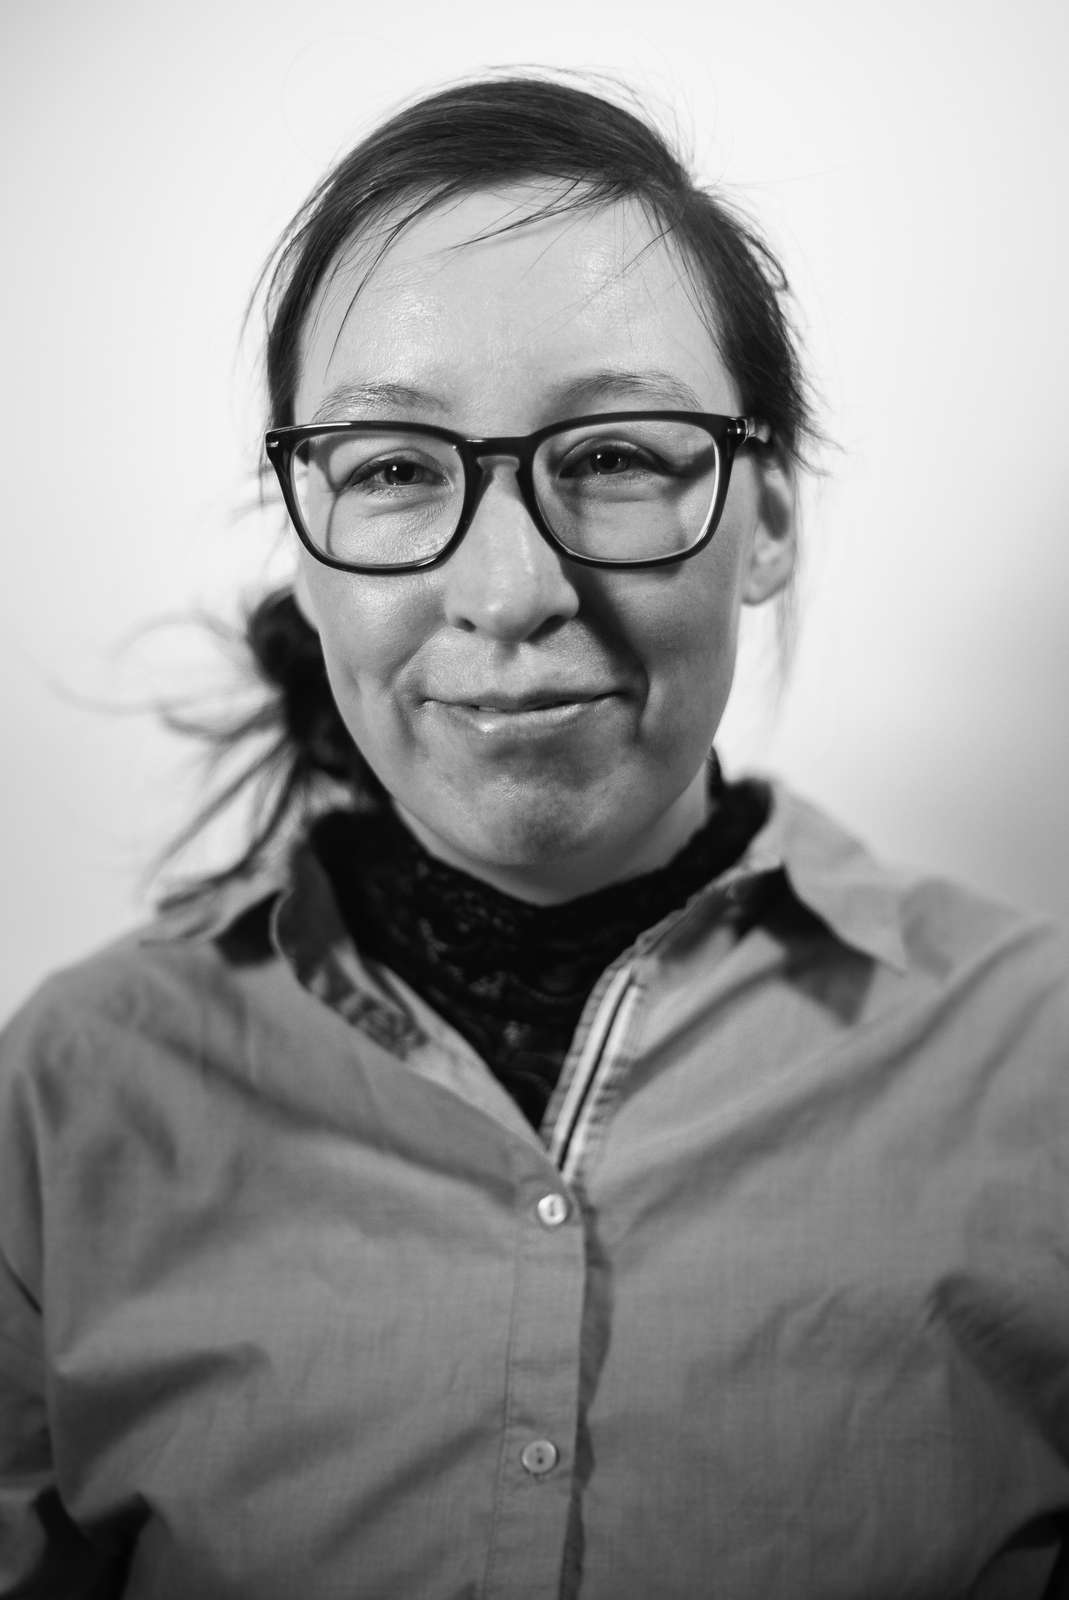 Tuttuarannguaq - Camilla Sommer, Greenland